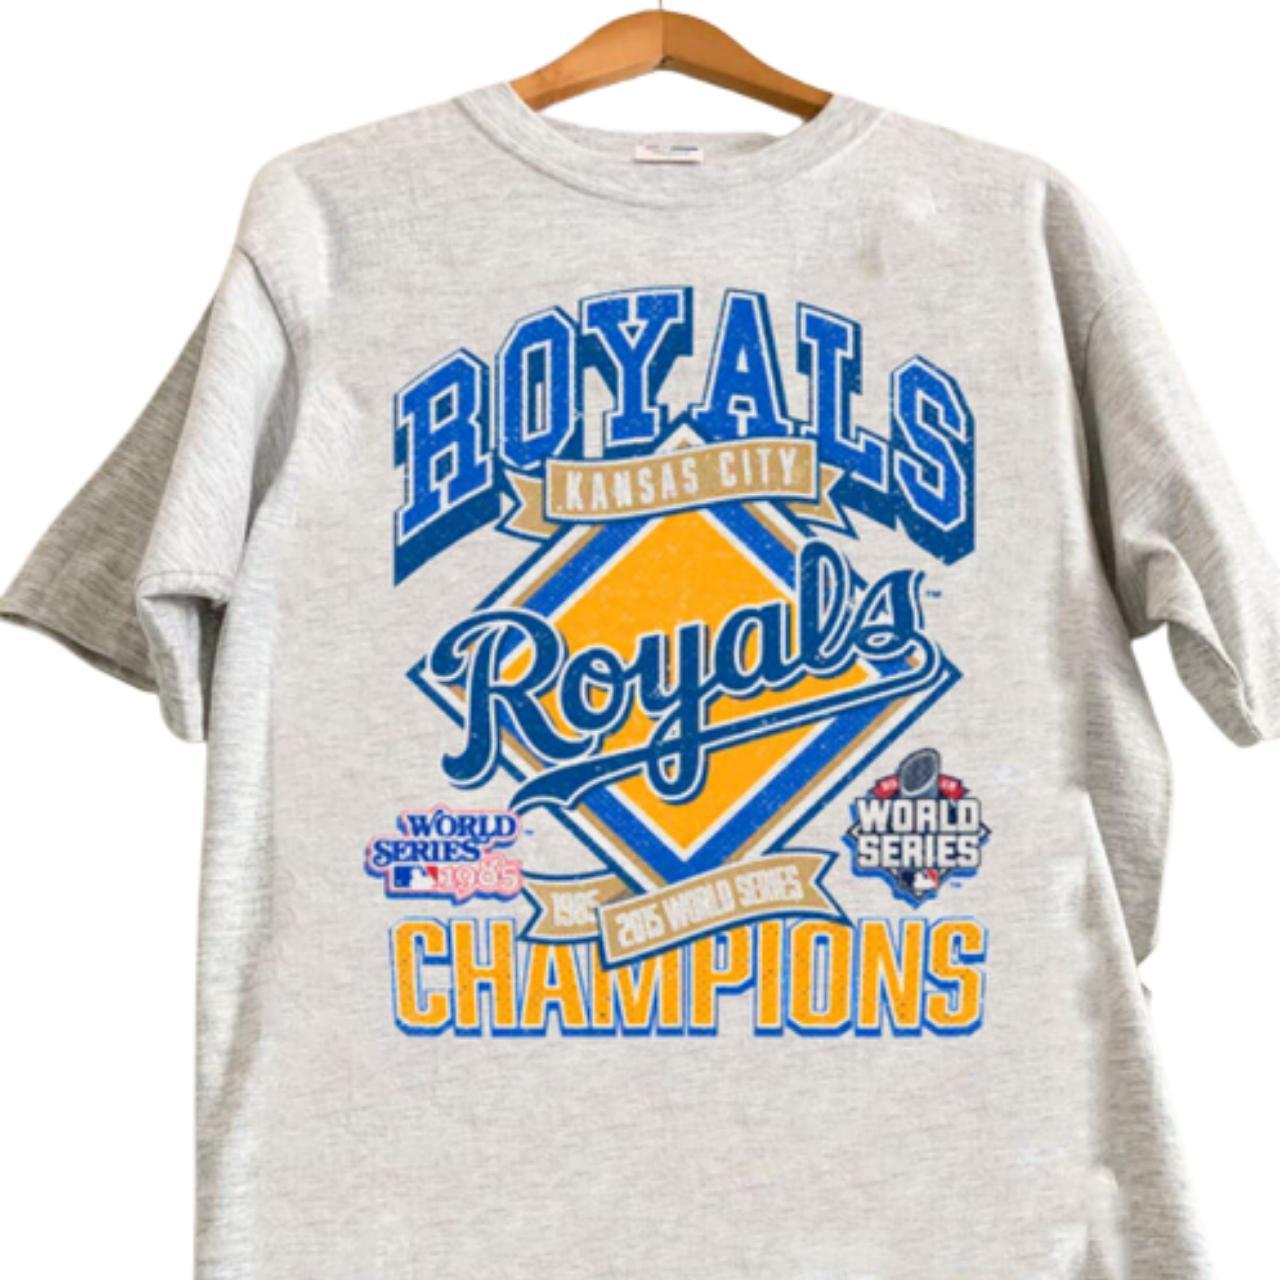 Vintage 1985 Kansas City Royals World Series Champions Shirt 